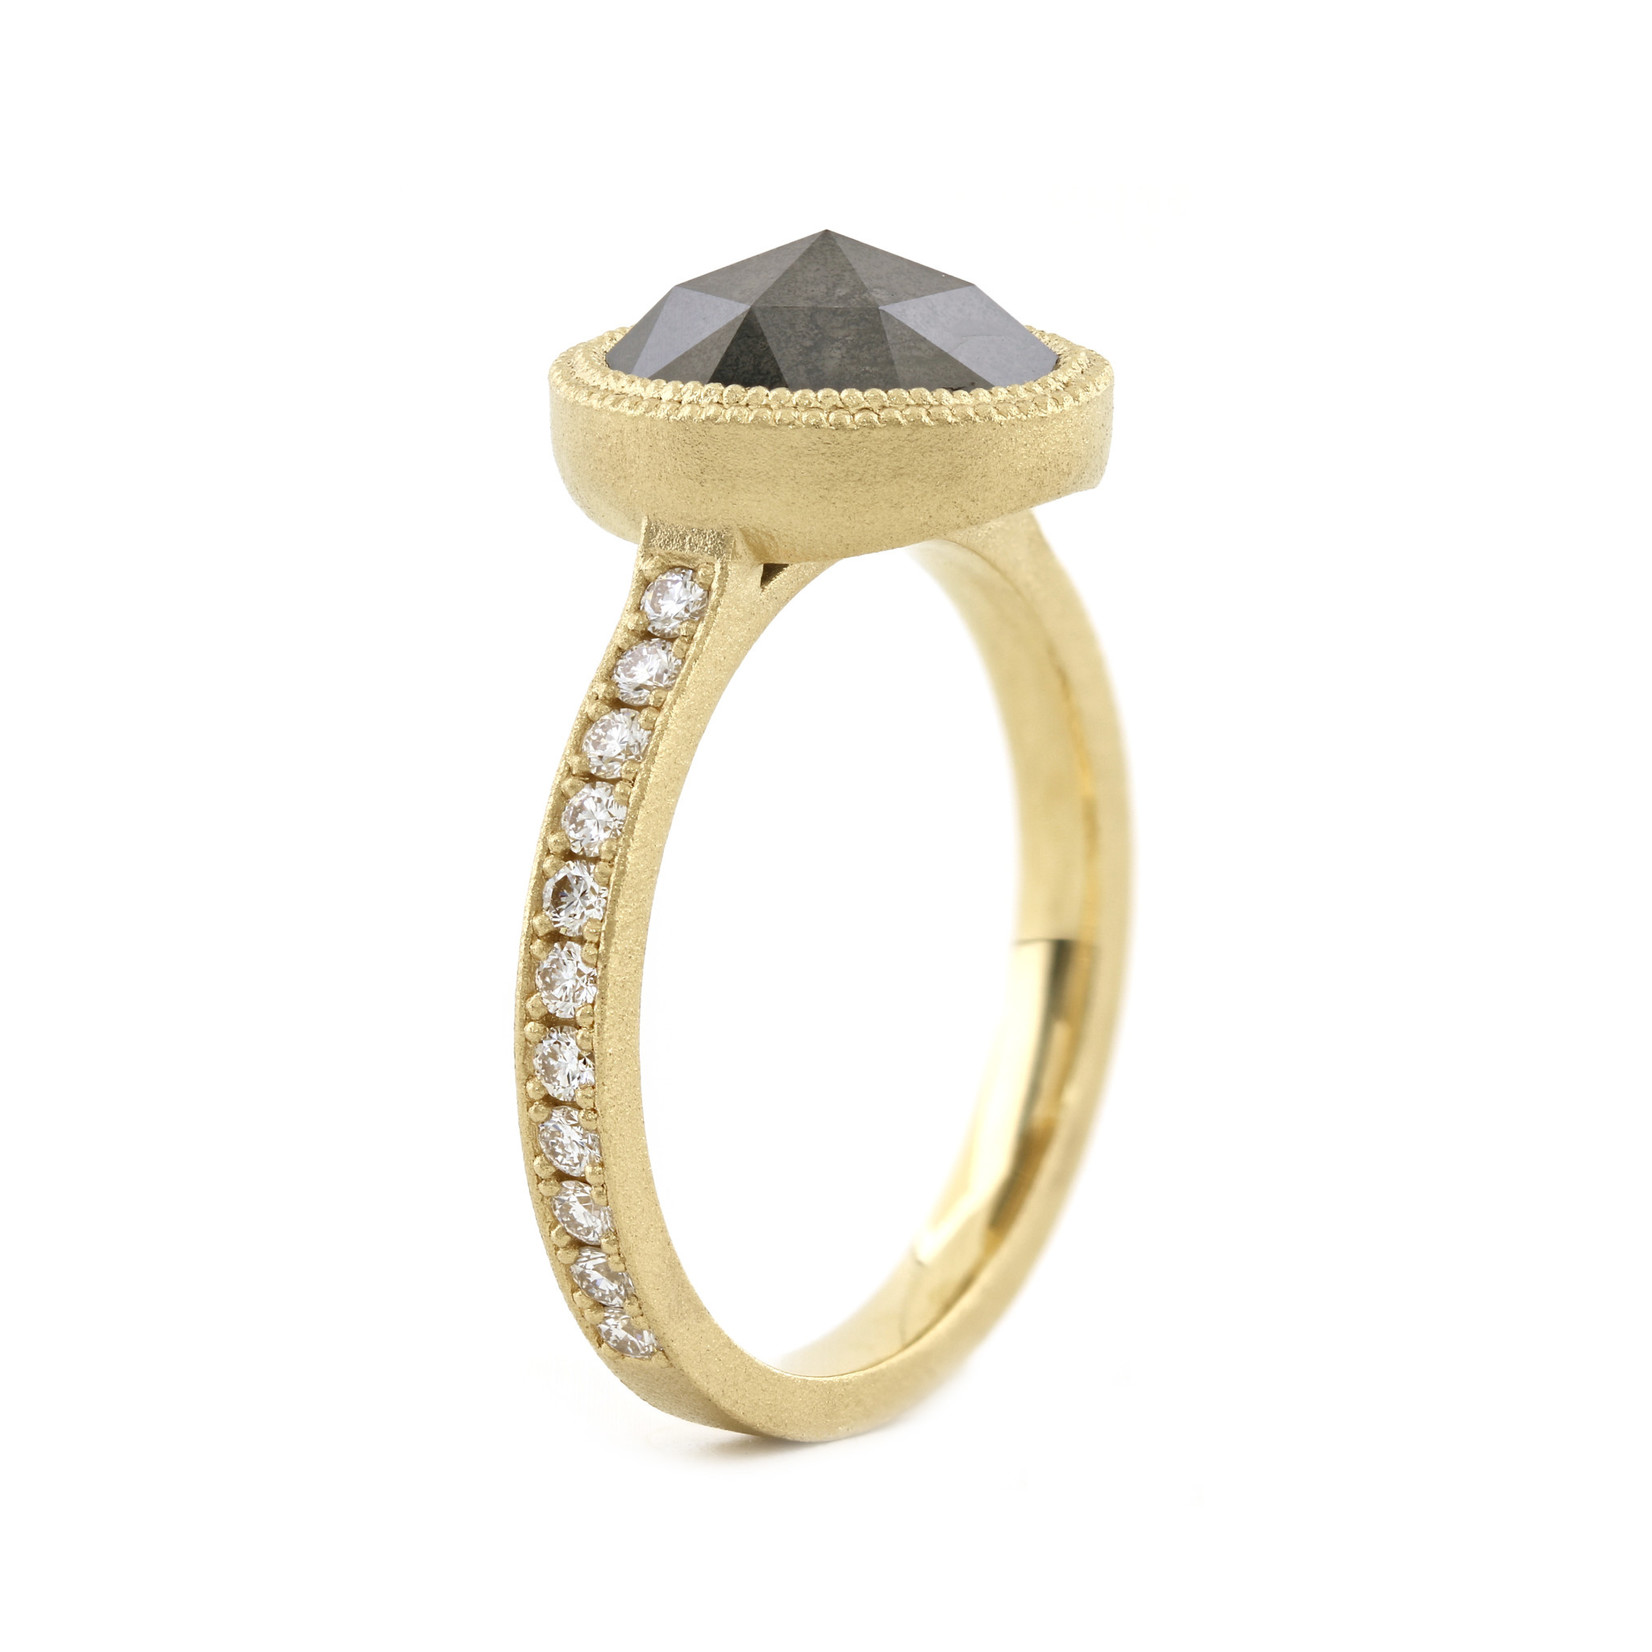 Baxter Moerman Stella Engagement Ring with Black Rose Cut Diamond